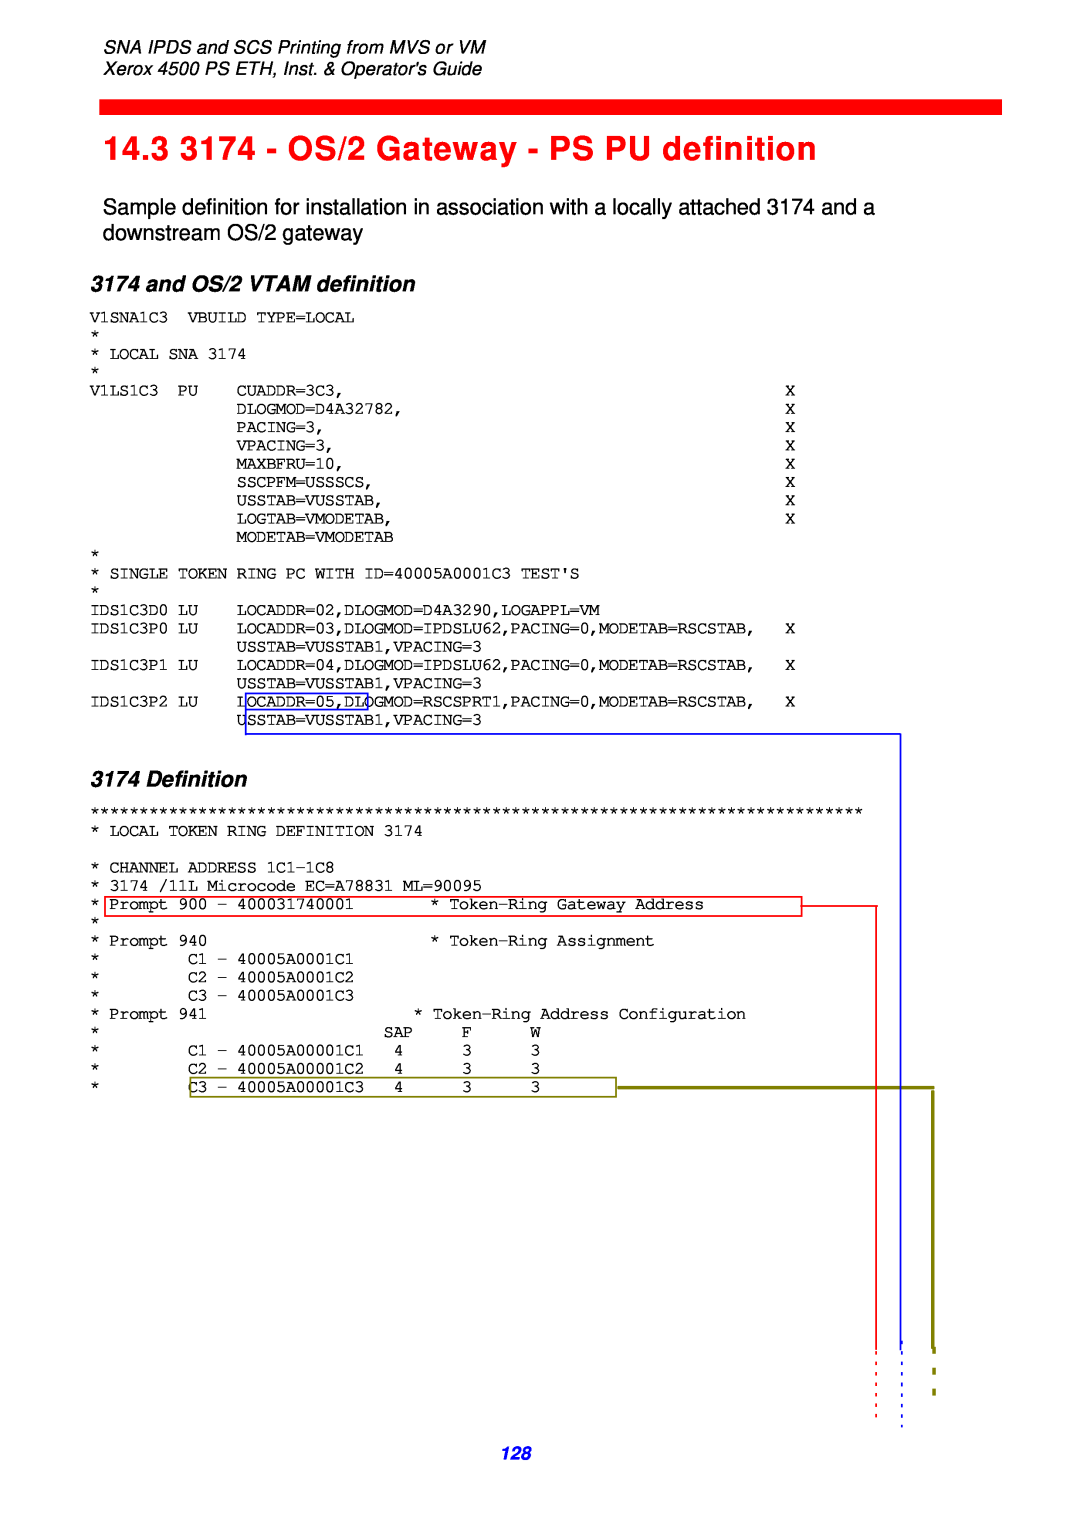 Xerox 4500 ps eth instruction manual 14.3 3174 - OS/2 Gateway - PS PU definition, and OS/2 VTAM definition, Definition 